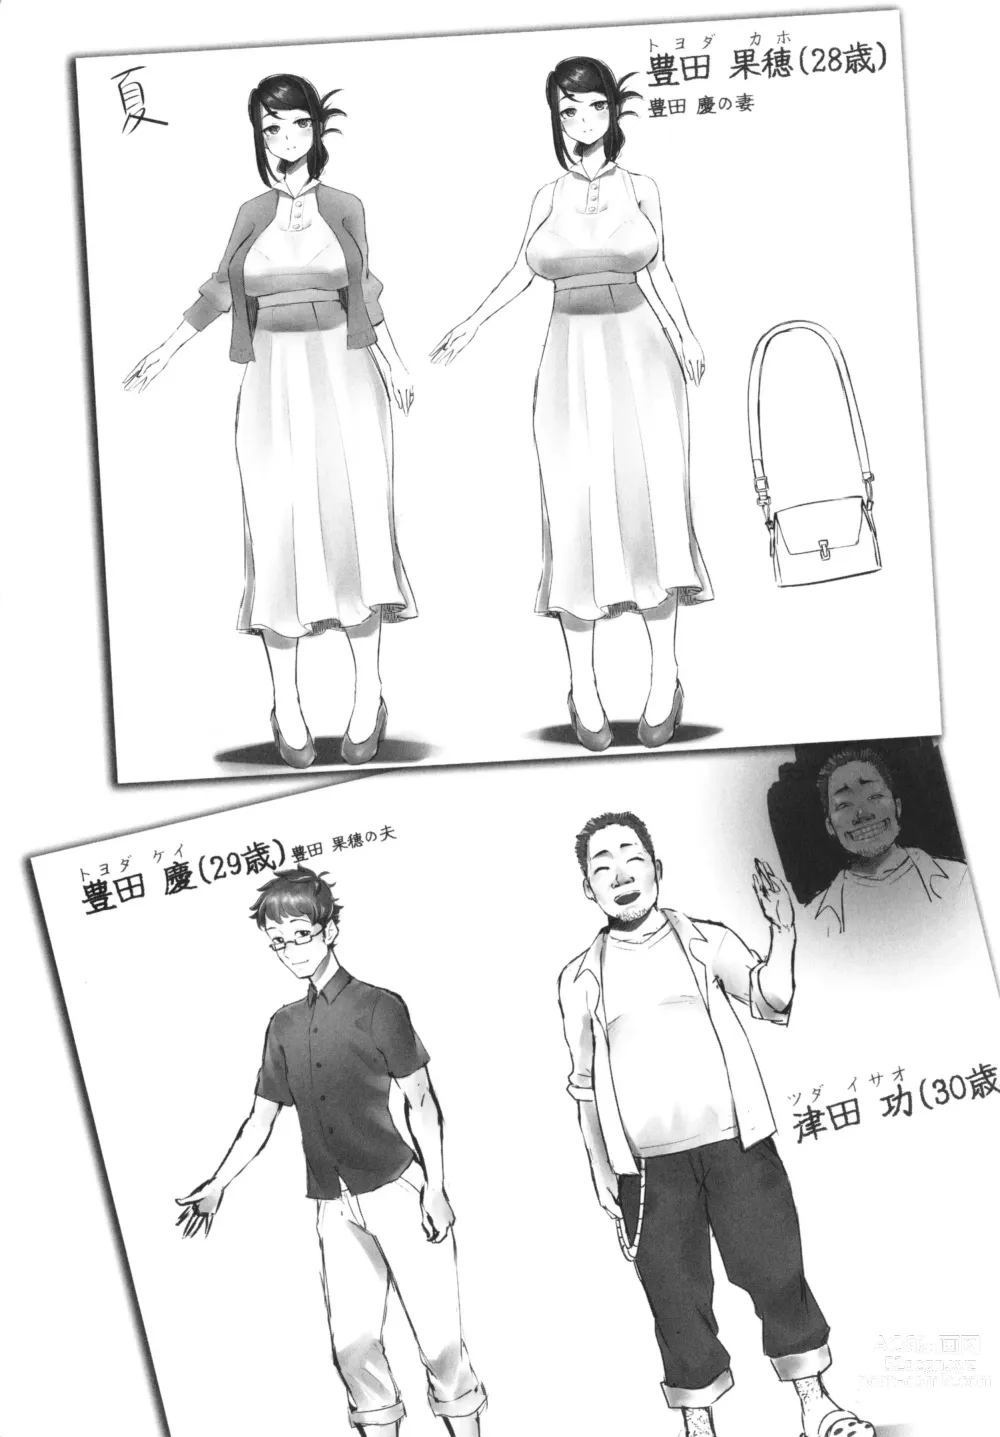 Page 210 of manga Kakuregoto